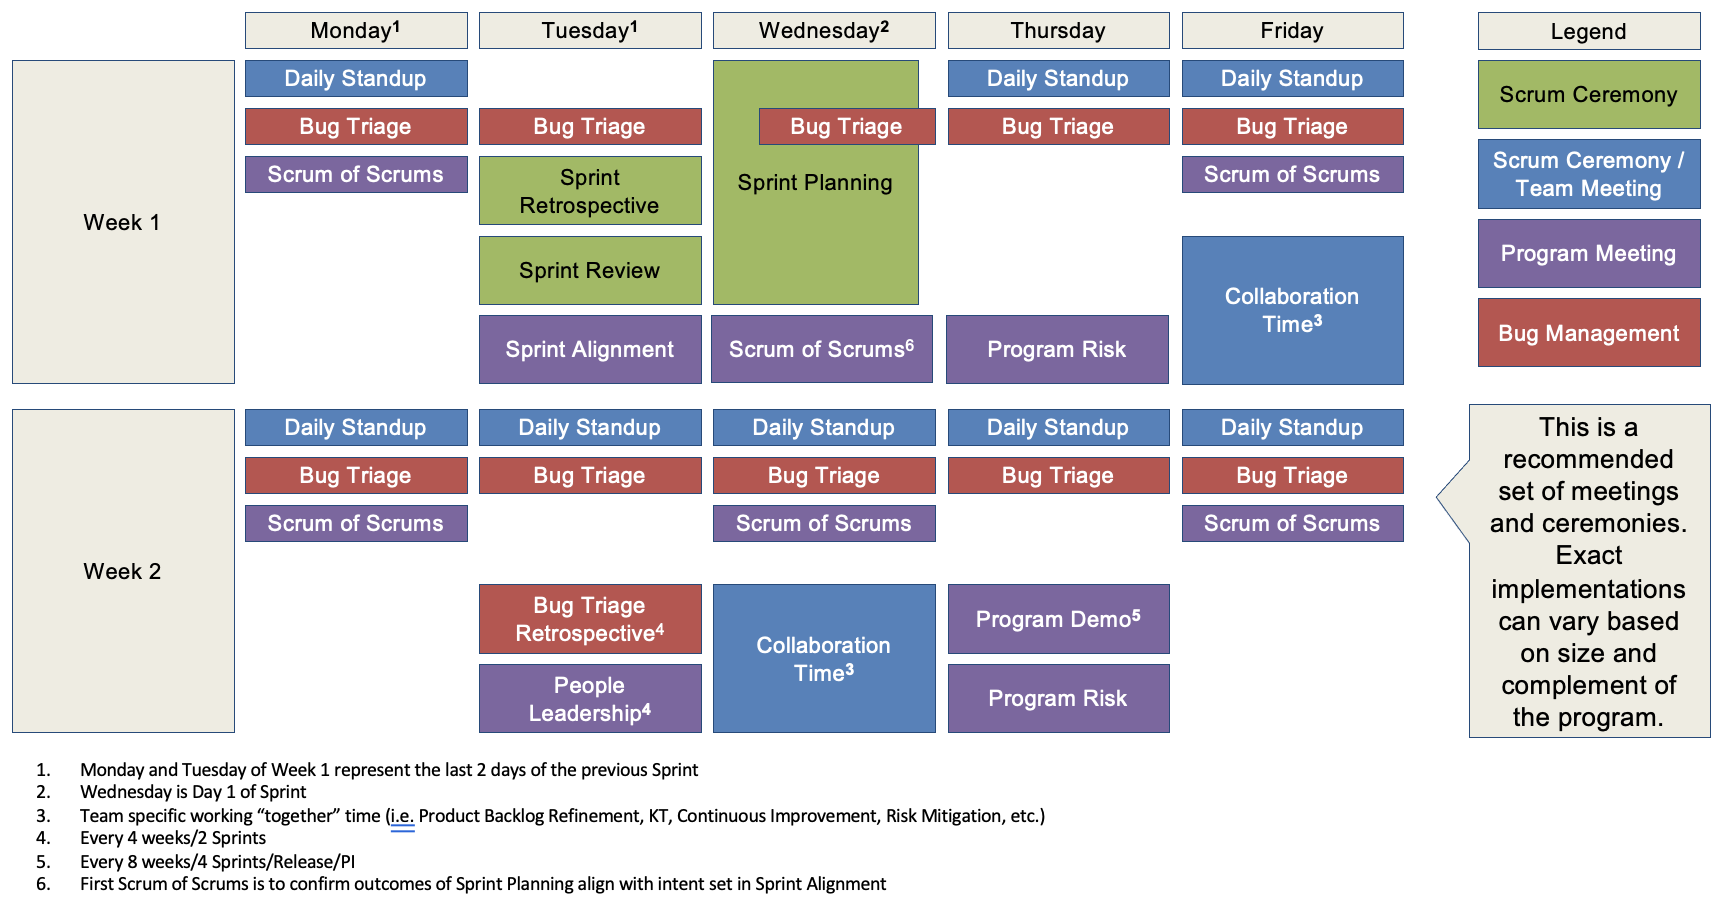 Agile Delivery Playbook - Program Ceremonies Meeting Schedule